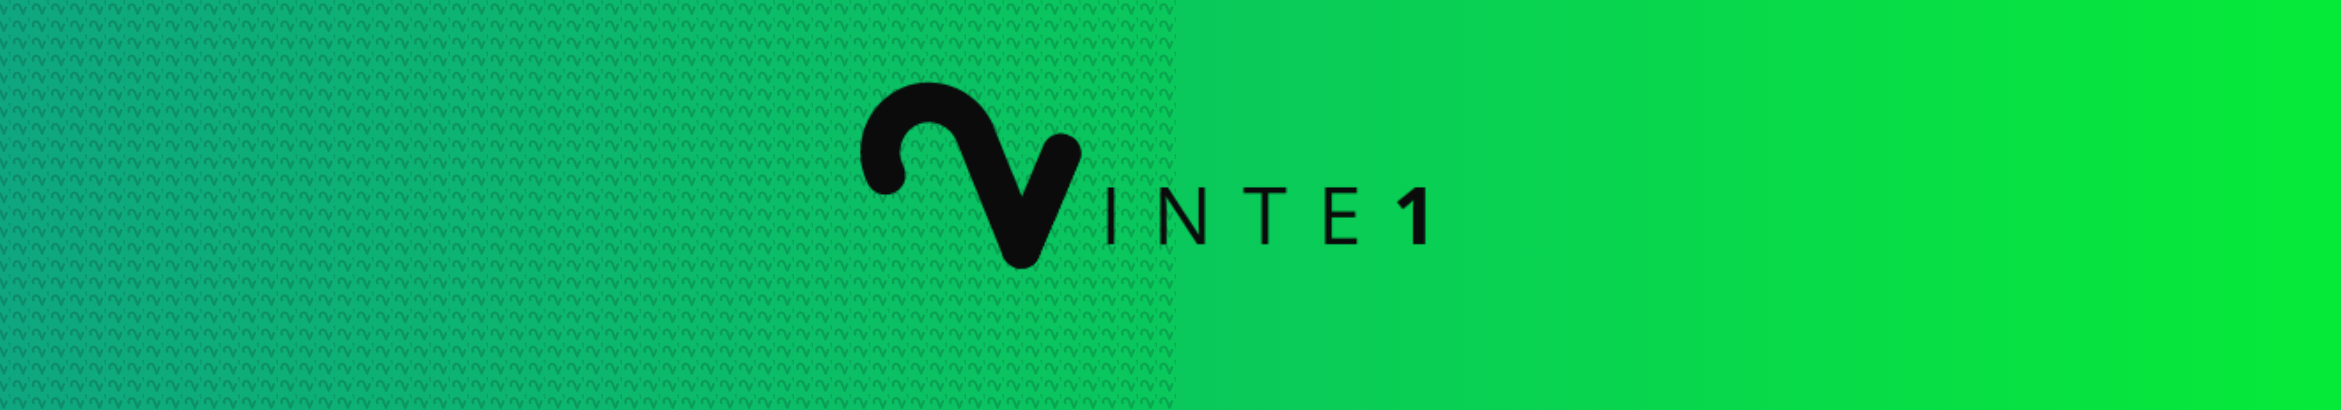 Vinte1 Design のプロファイルバナー